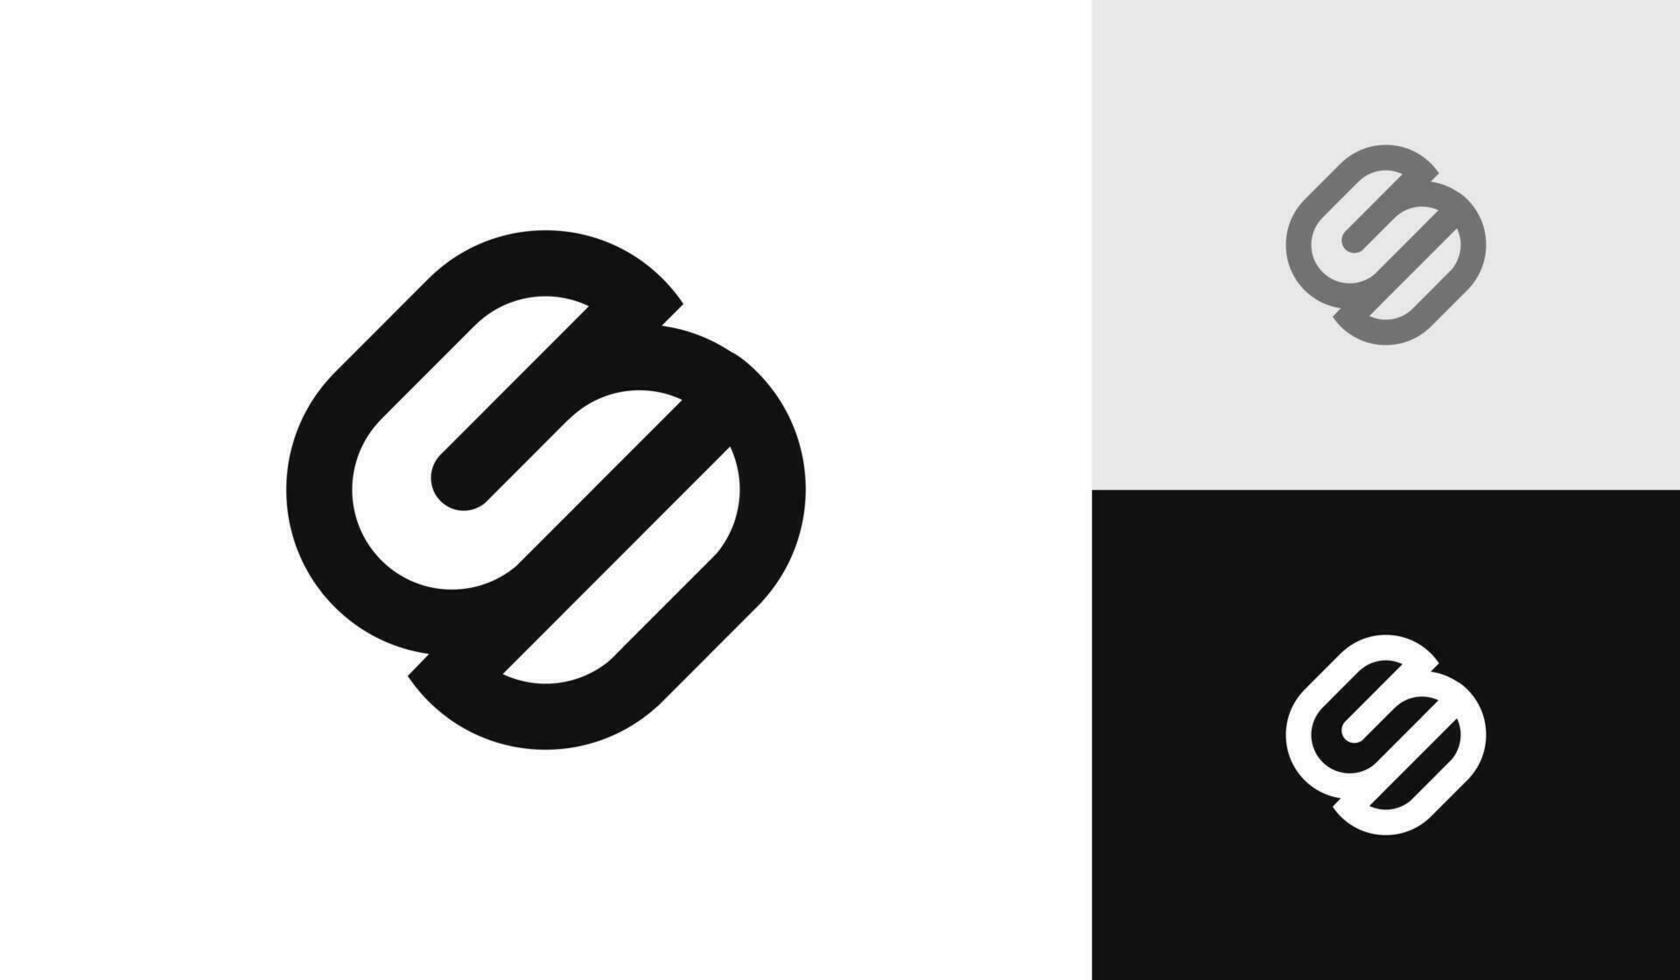 lettera cs iniziale monogramma logo design vettore